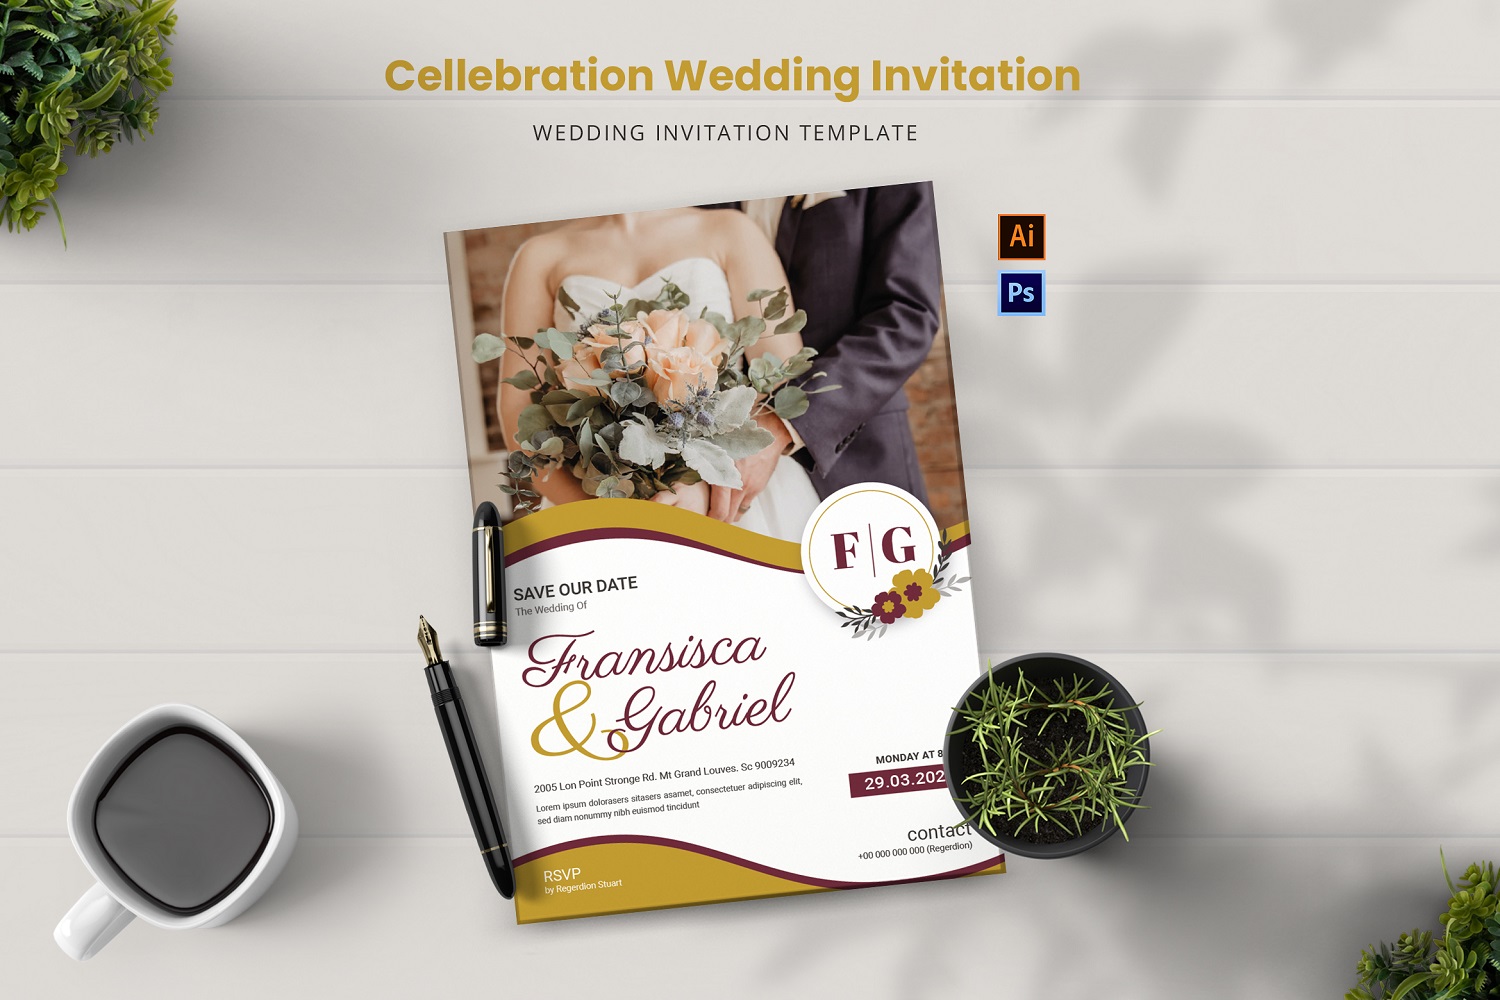 Wedding Cellebration Wedding Invitation